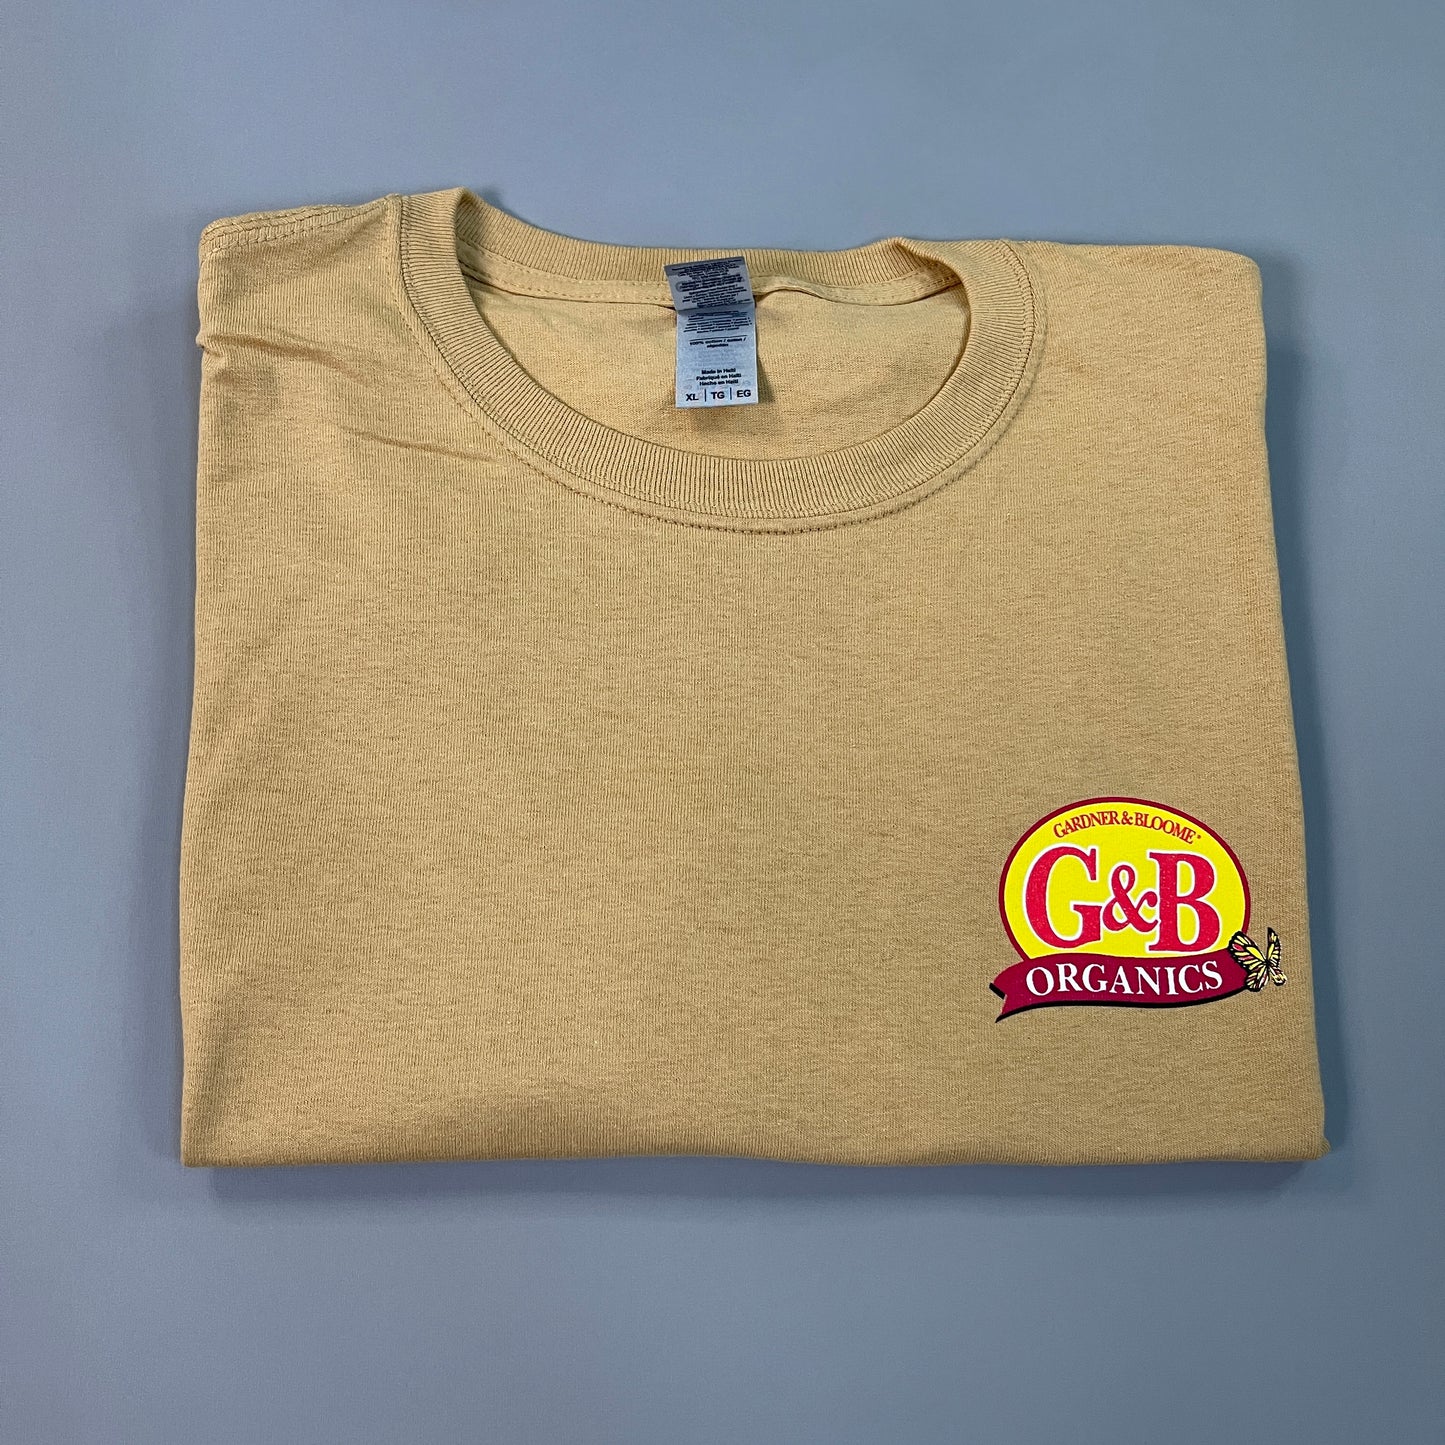 G&B Organics "I'm Diggin This" Logo T-shirt Unisex Sz XL Mustard (New)